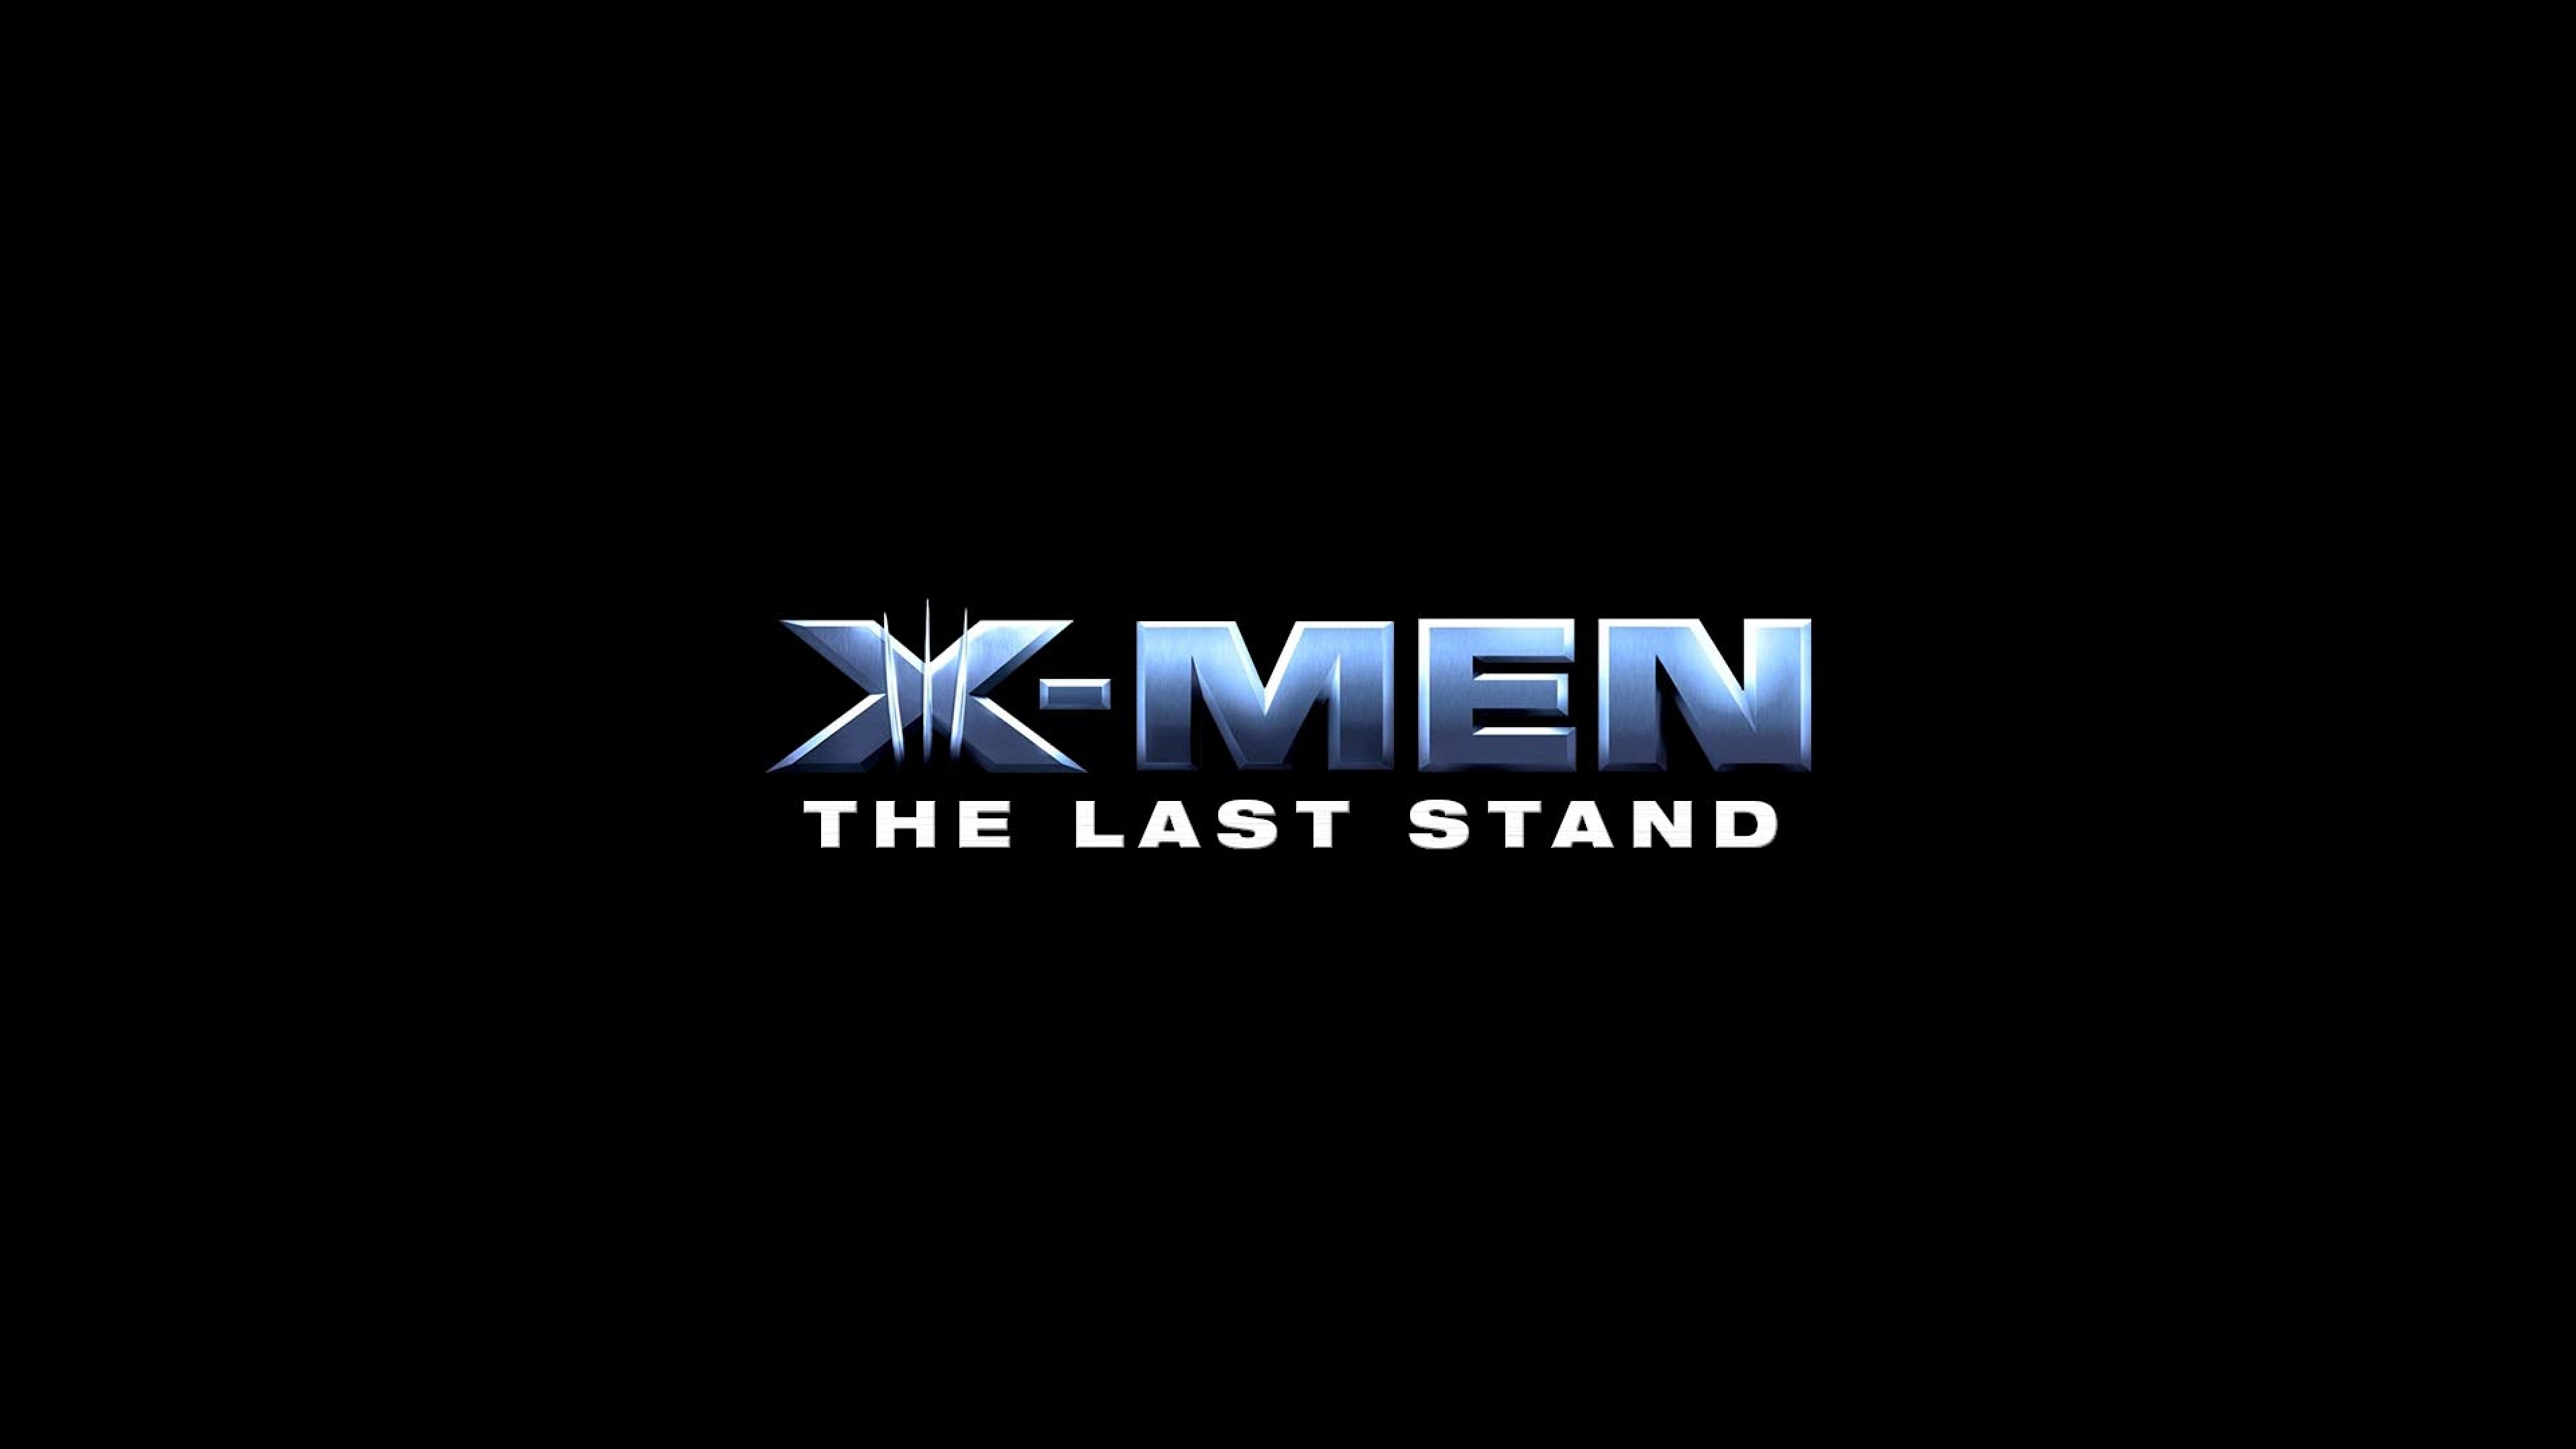 Imagens X-Men The Last Stand 3840x2160